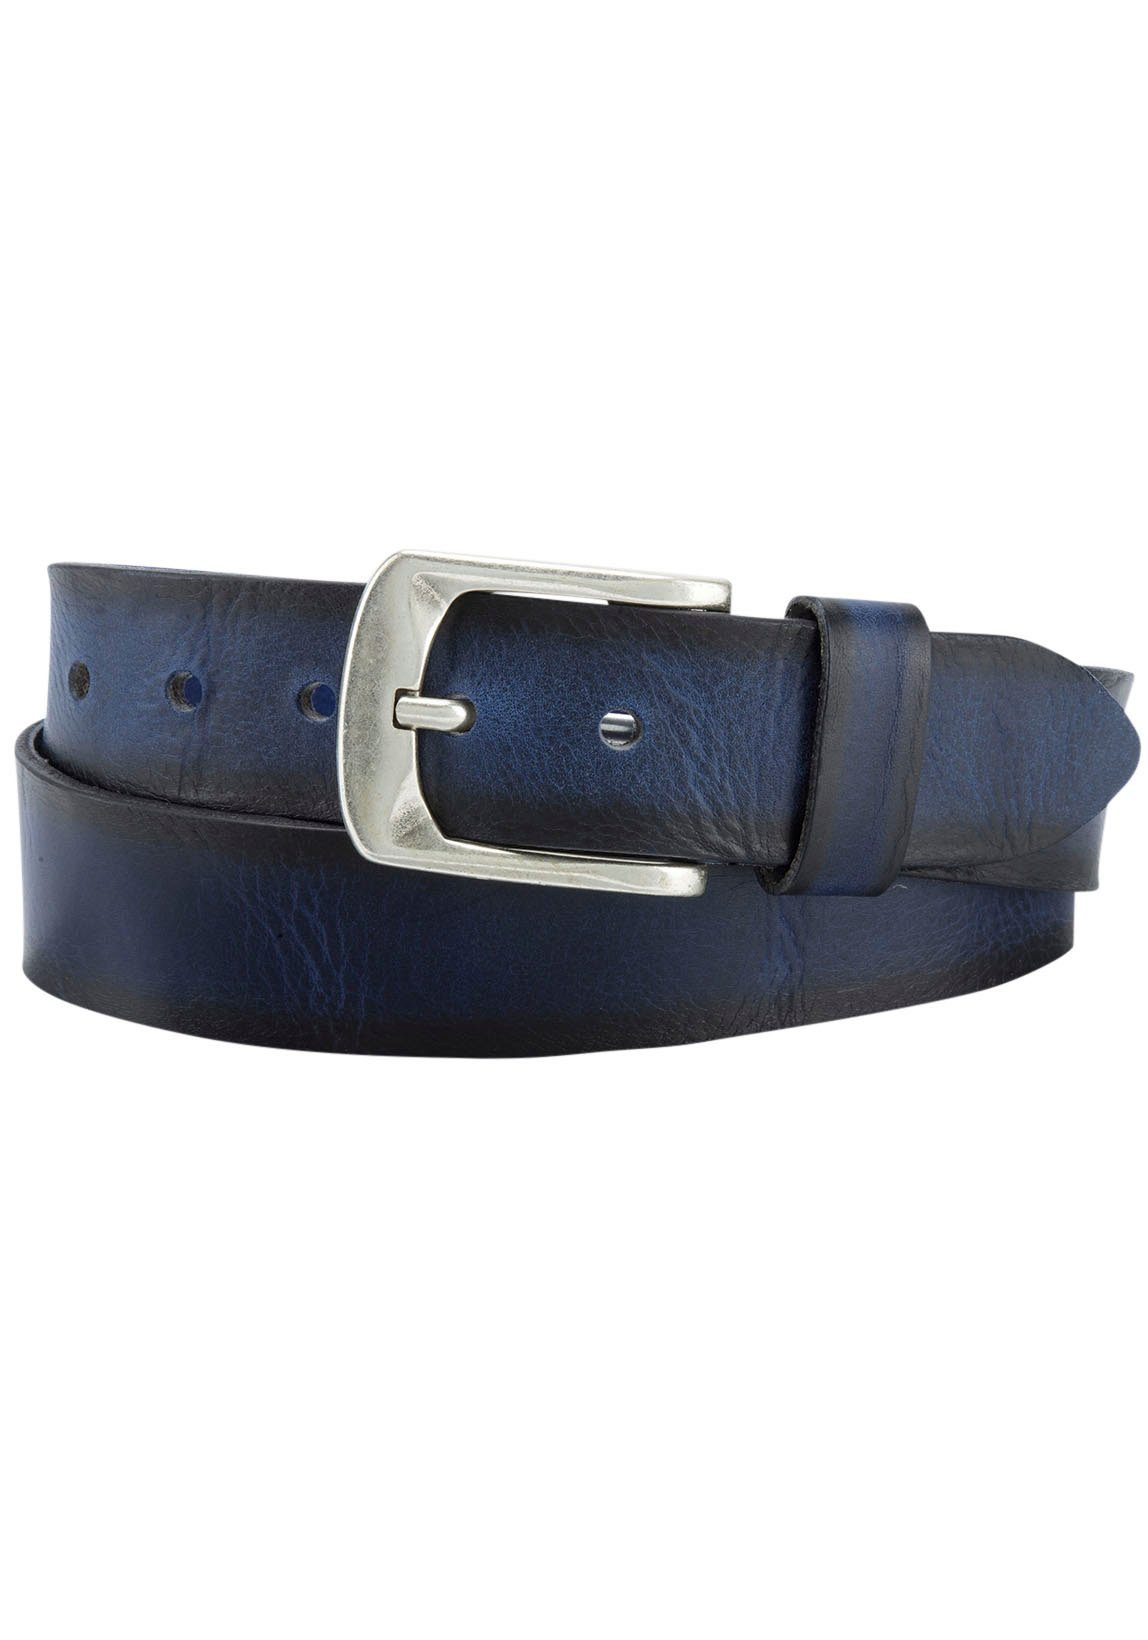 BERND GÖTZ Ledergürtel im Jeansstyle in vielen topaktuellen Farben dunkelblau | Gürtel